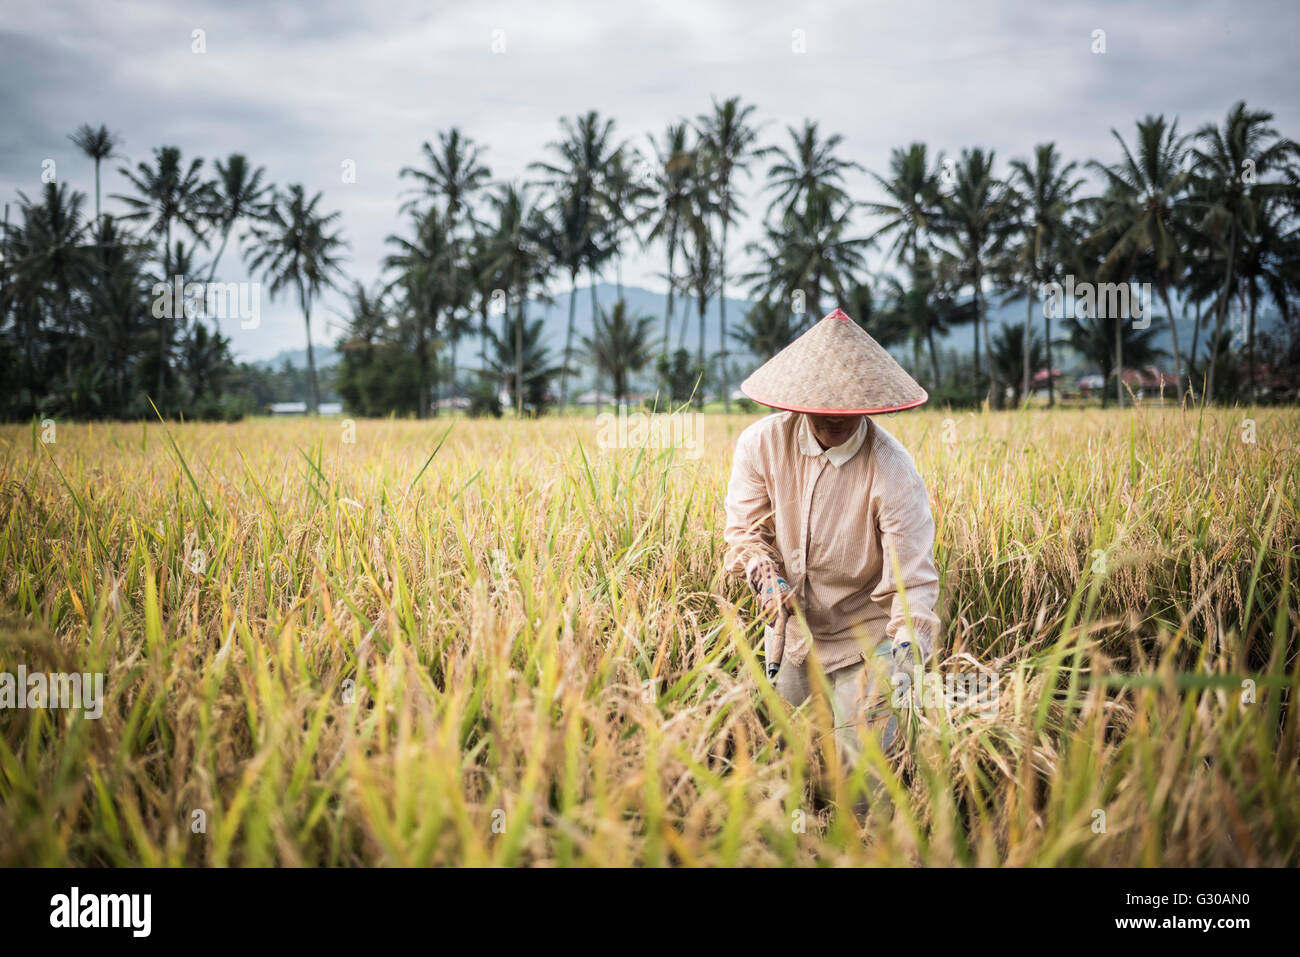 Los agricultores que trabajaban en un campo de arroz, de Bukittinggi, al oeste de Sumatra, Indonesia, Sudeste Asiático, Asia Foto de stock